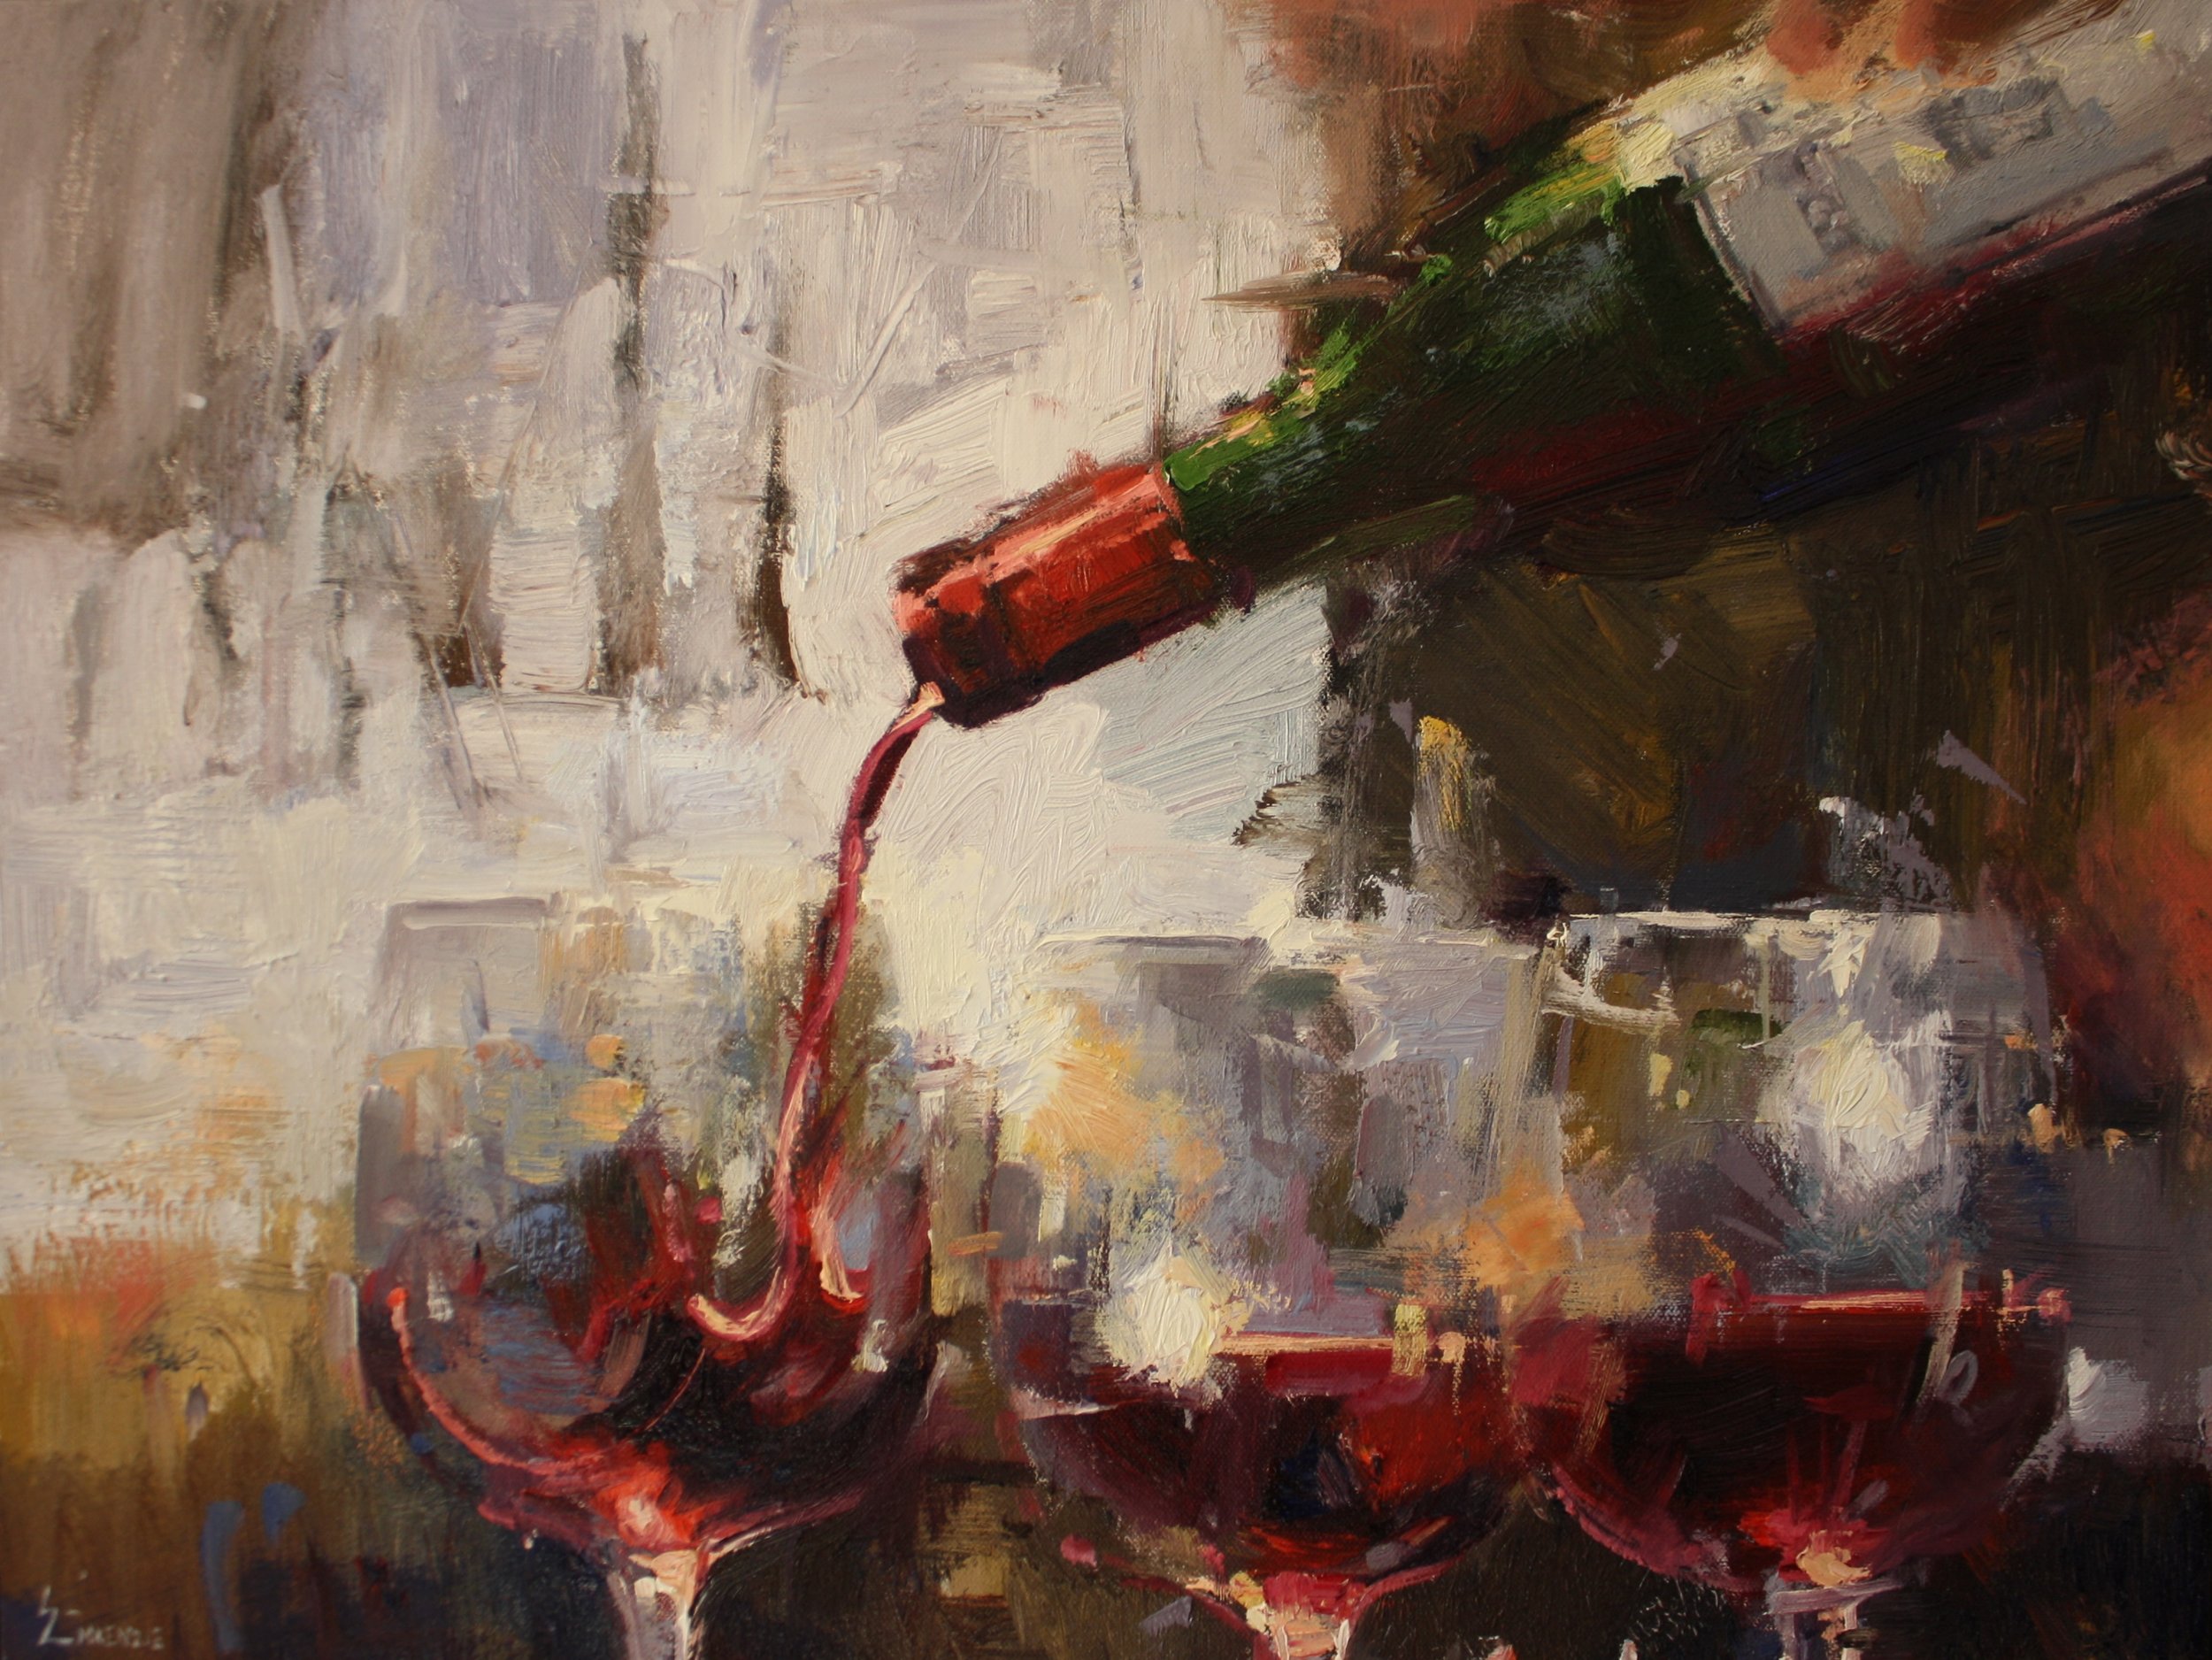  "Aspens and Wine" 16x20, $1800.. 